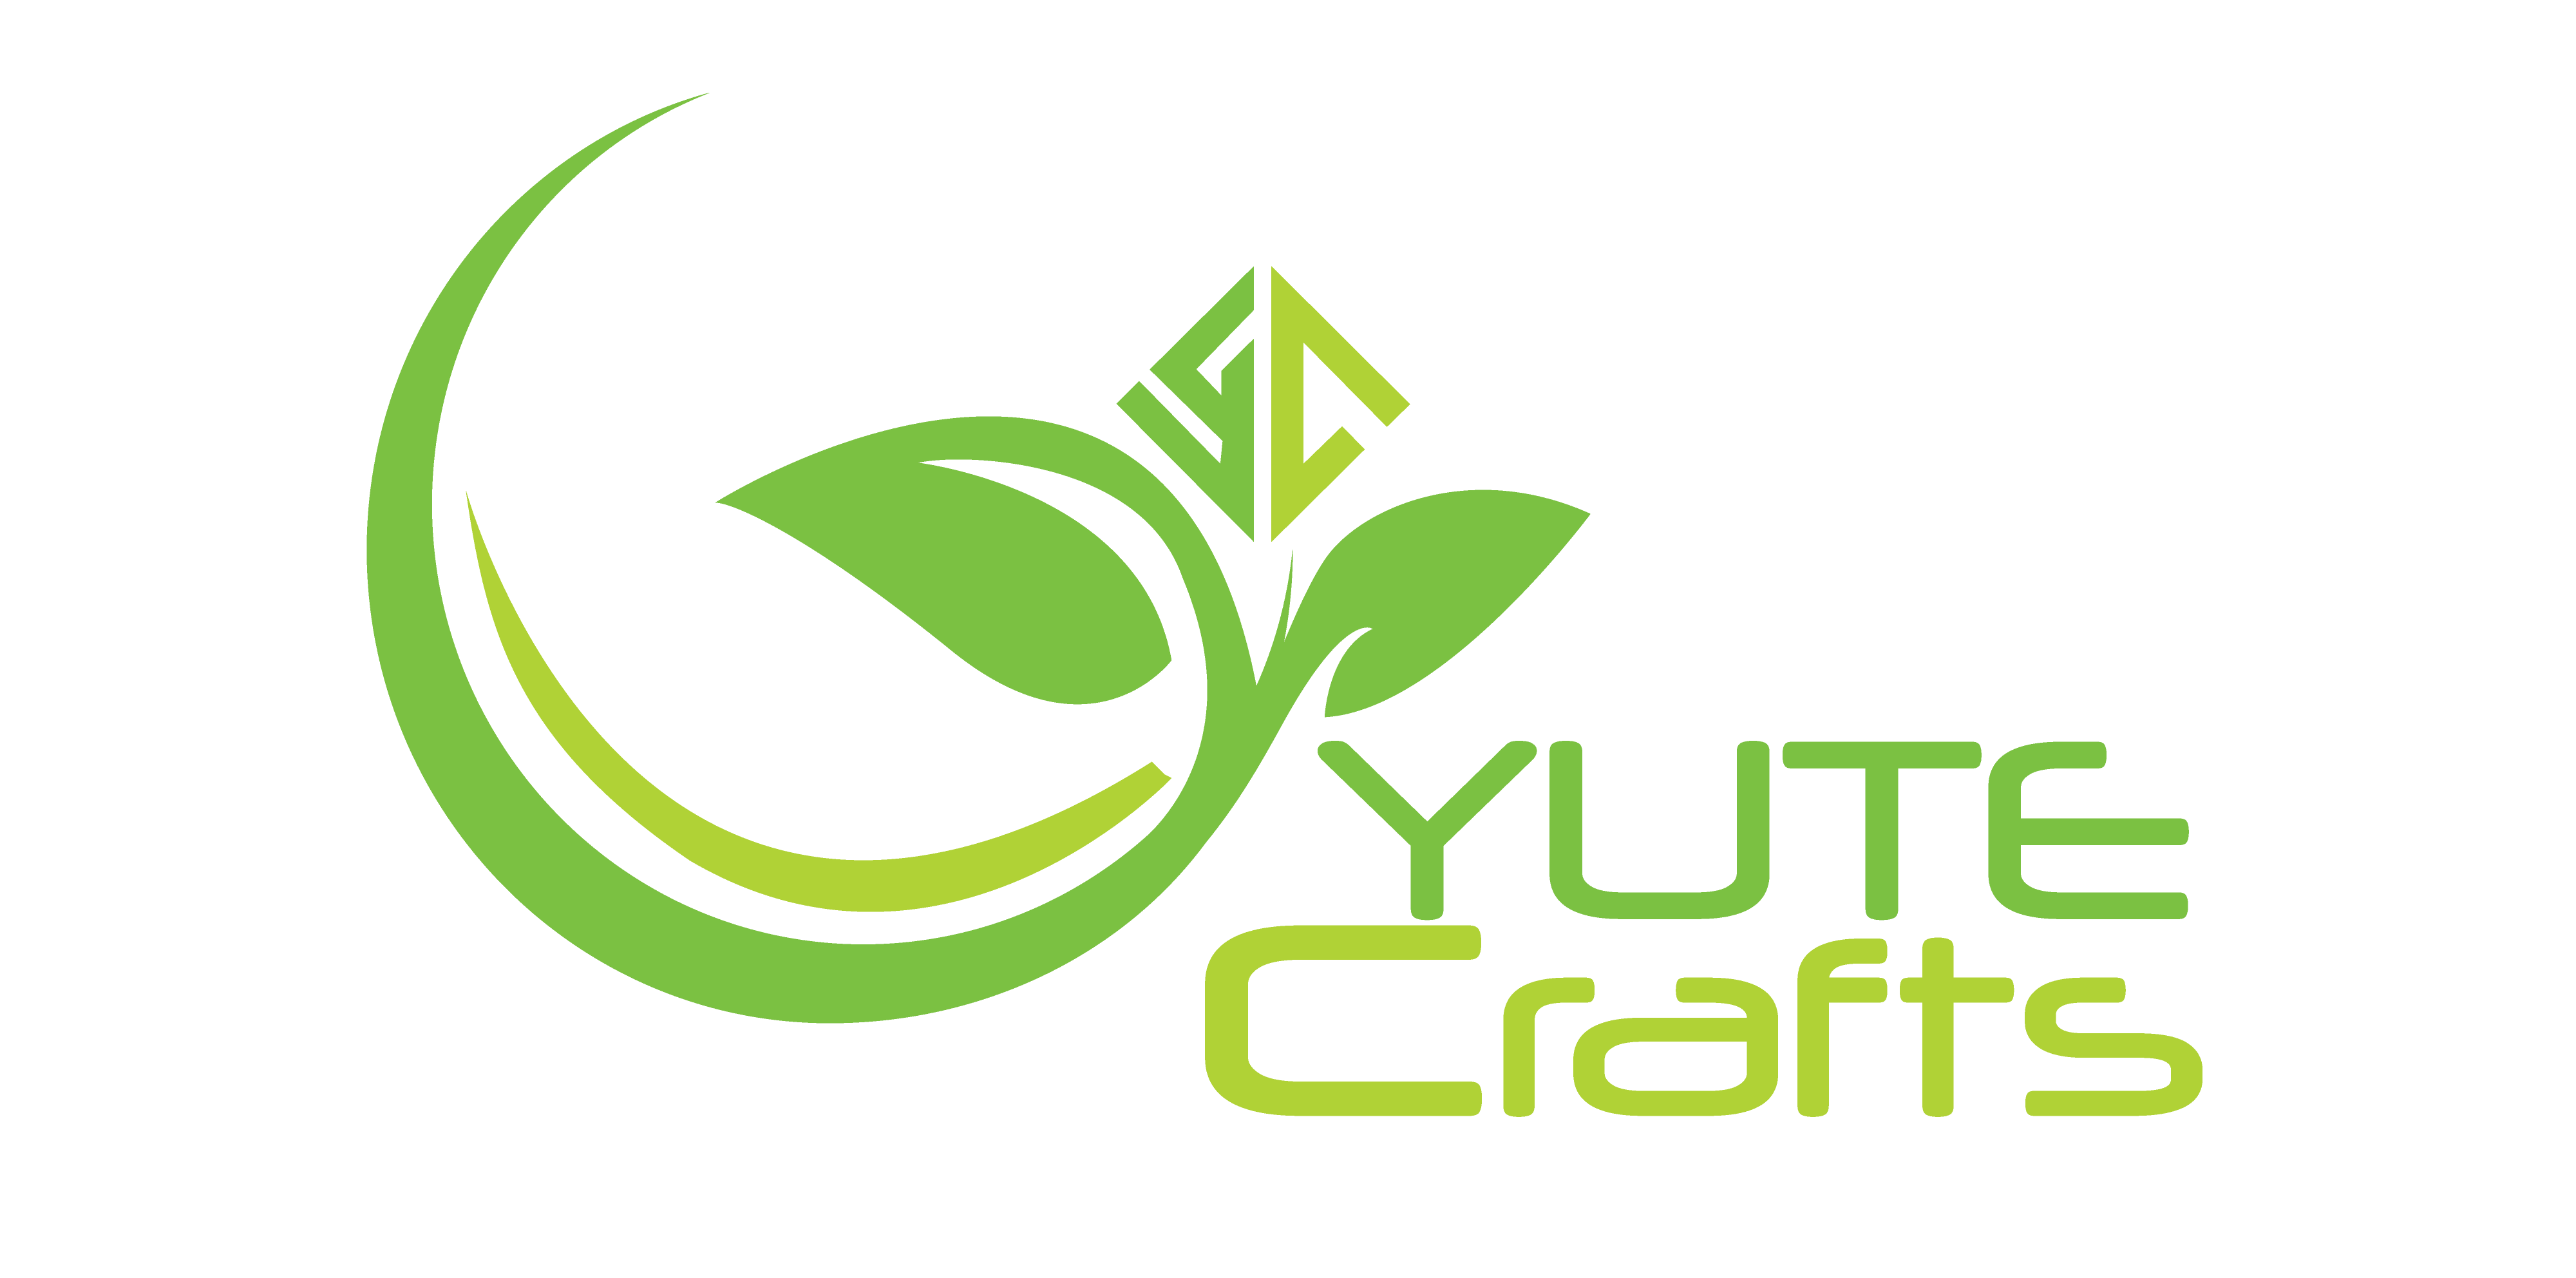 Yute crafts